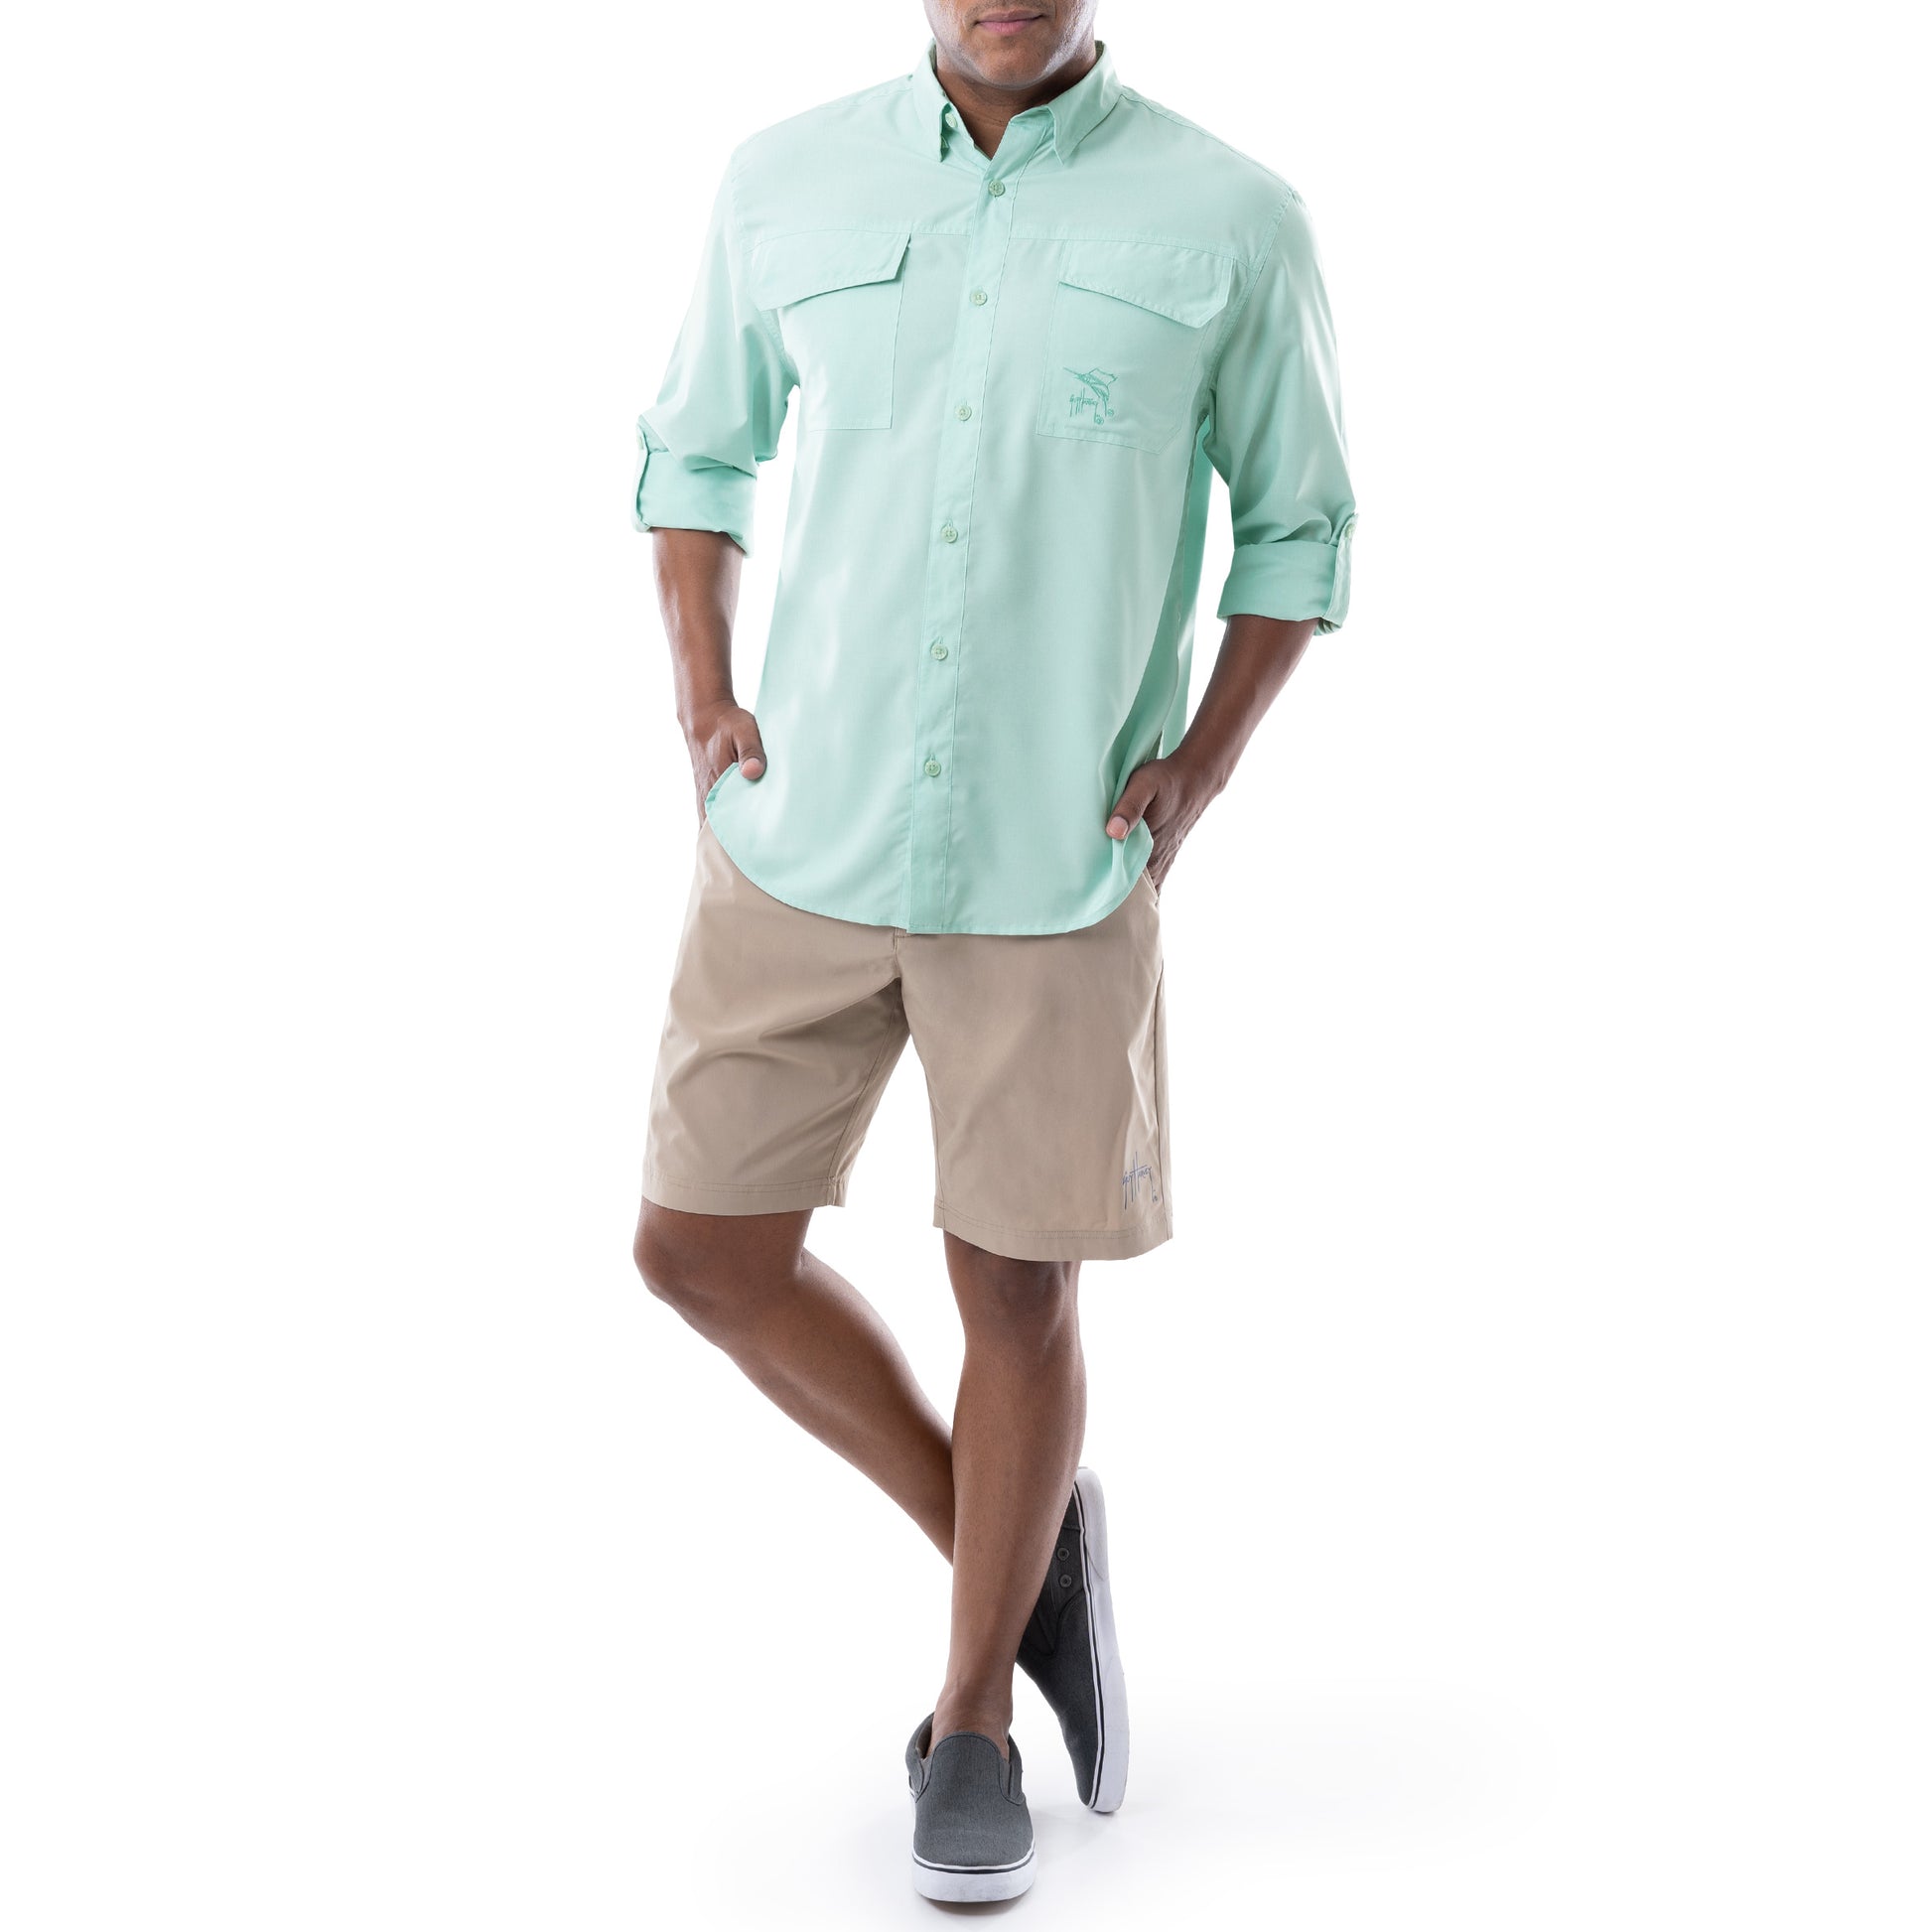 Fishing Shirts - Men's Short & Long Sleeve Performance Fishing Shirts